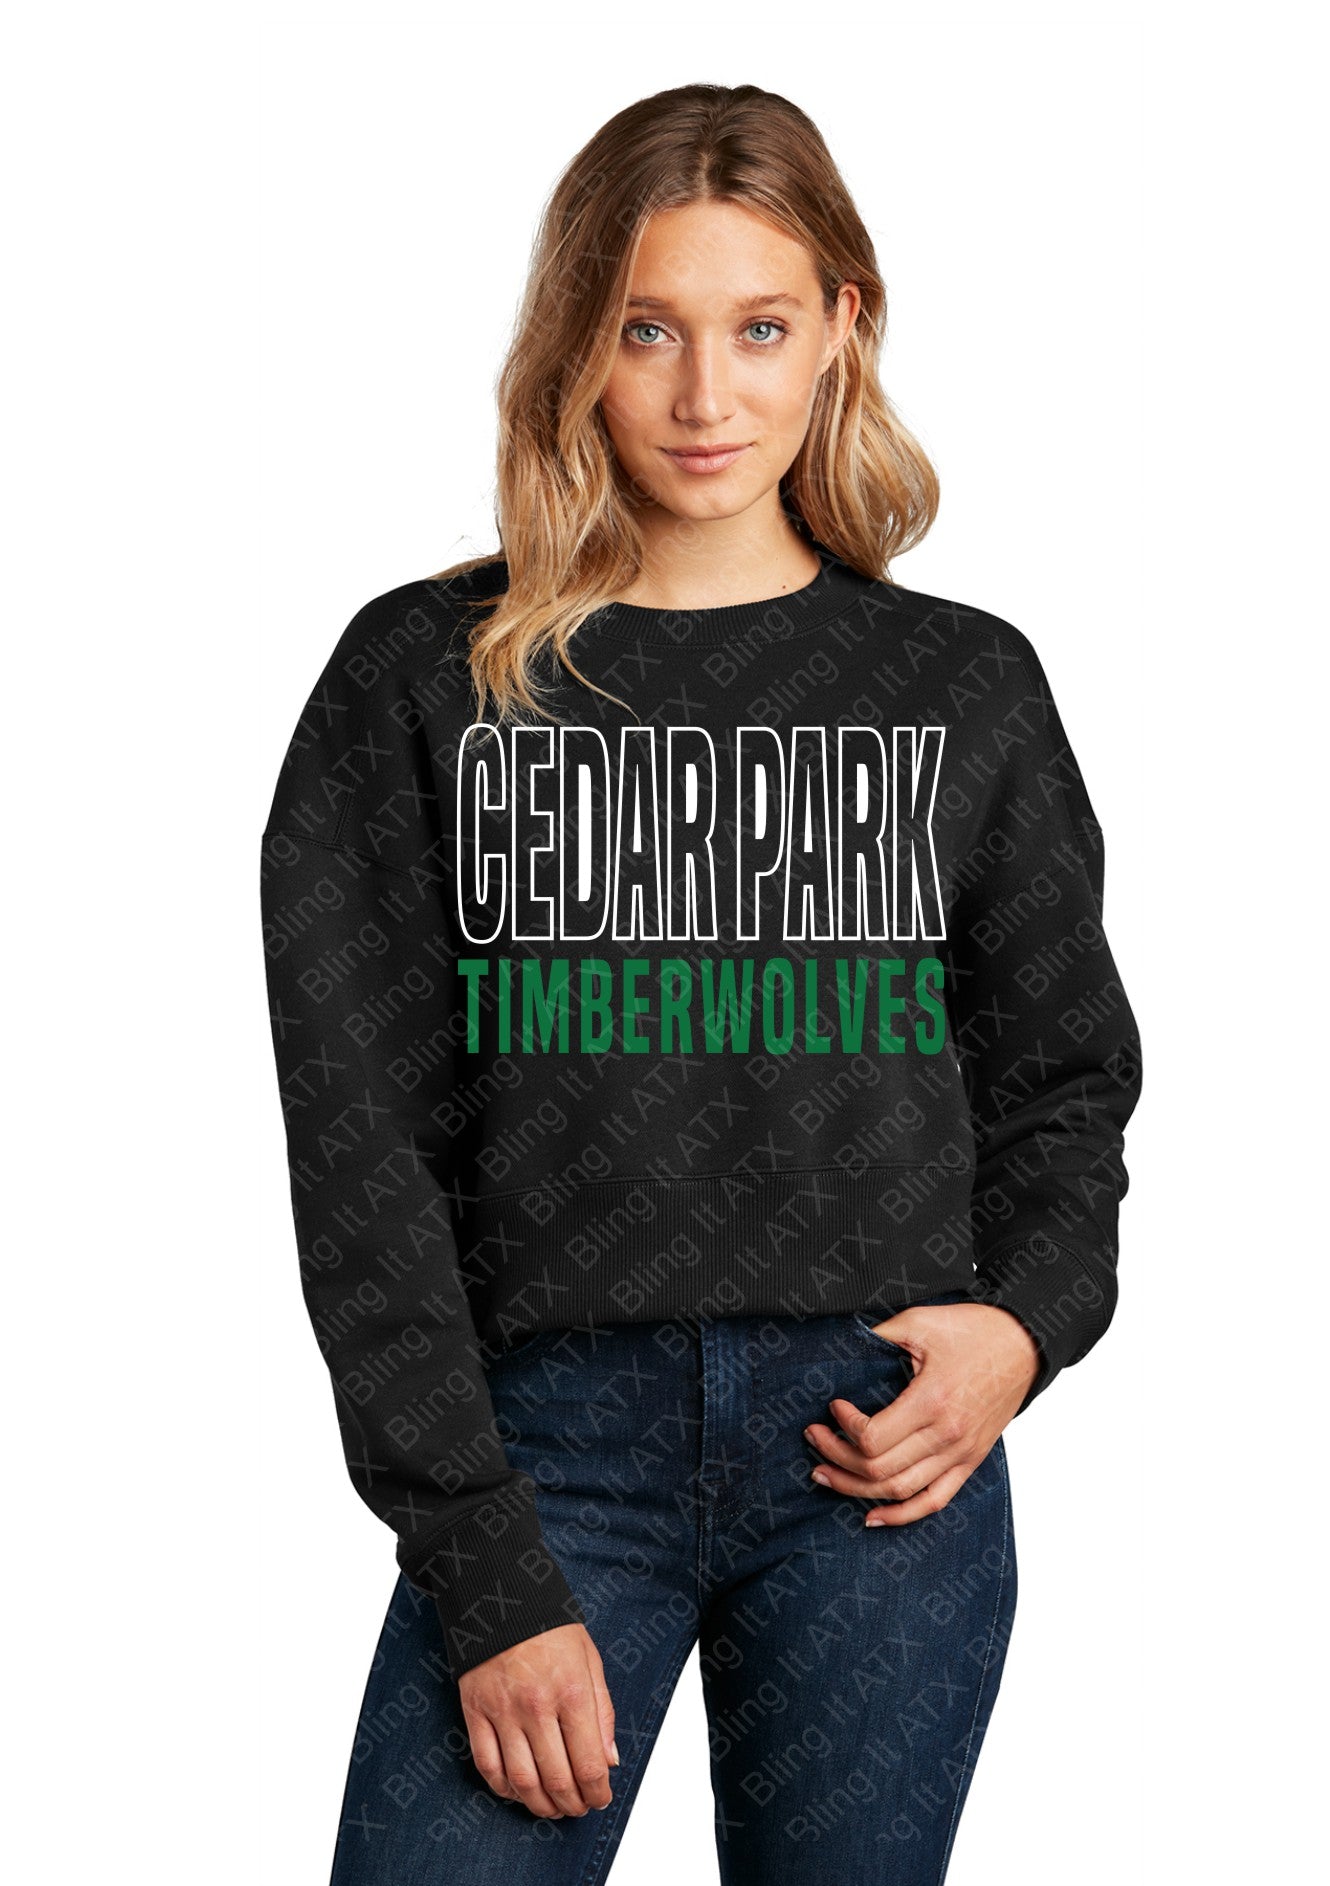 Cedar Park Timberwolves cropped sweatshirt